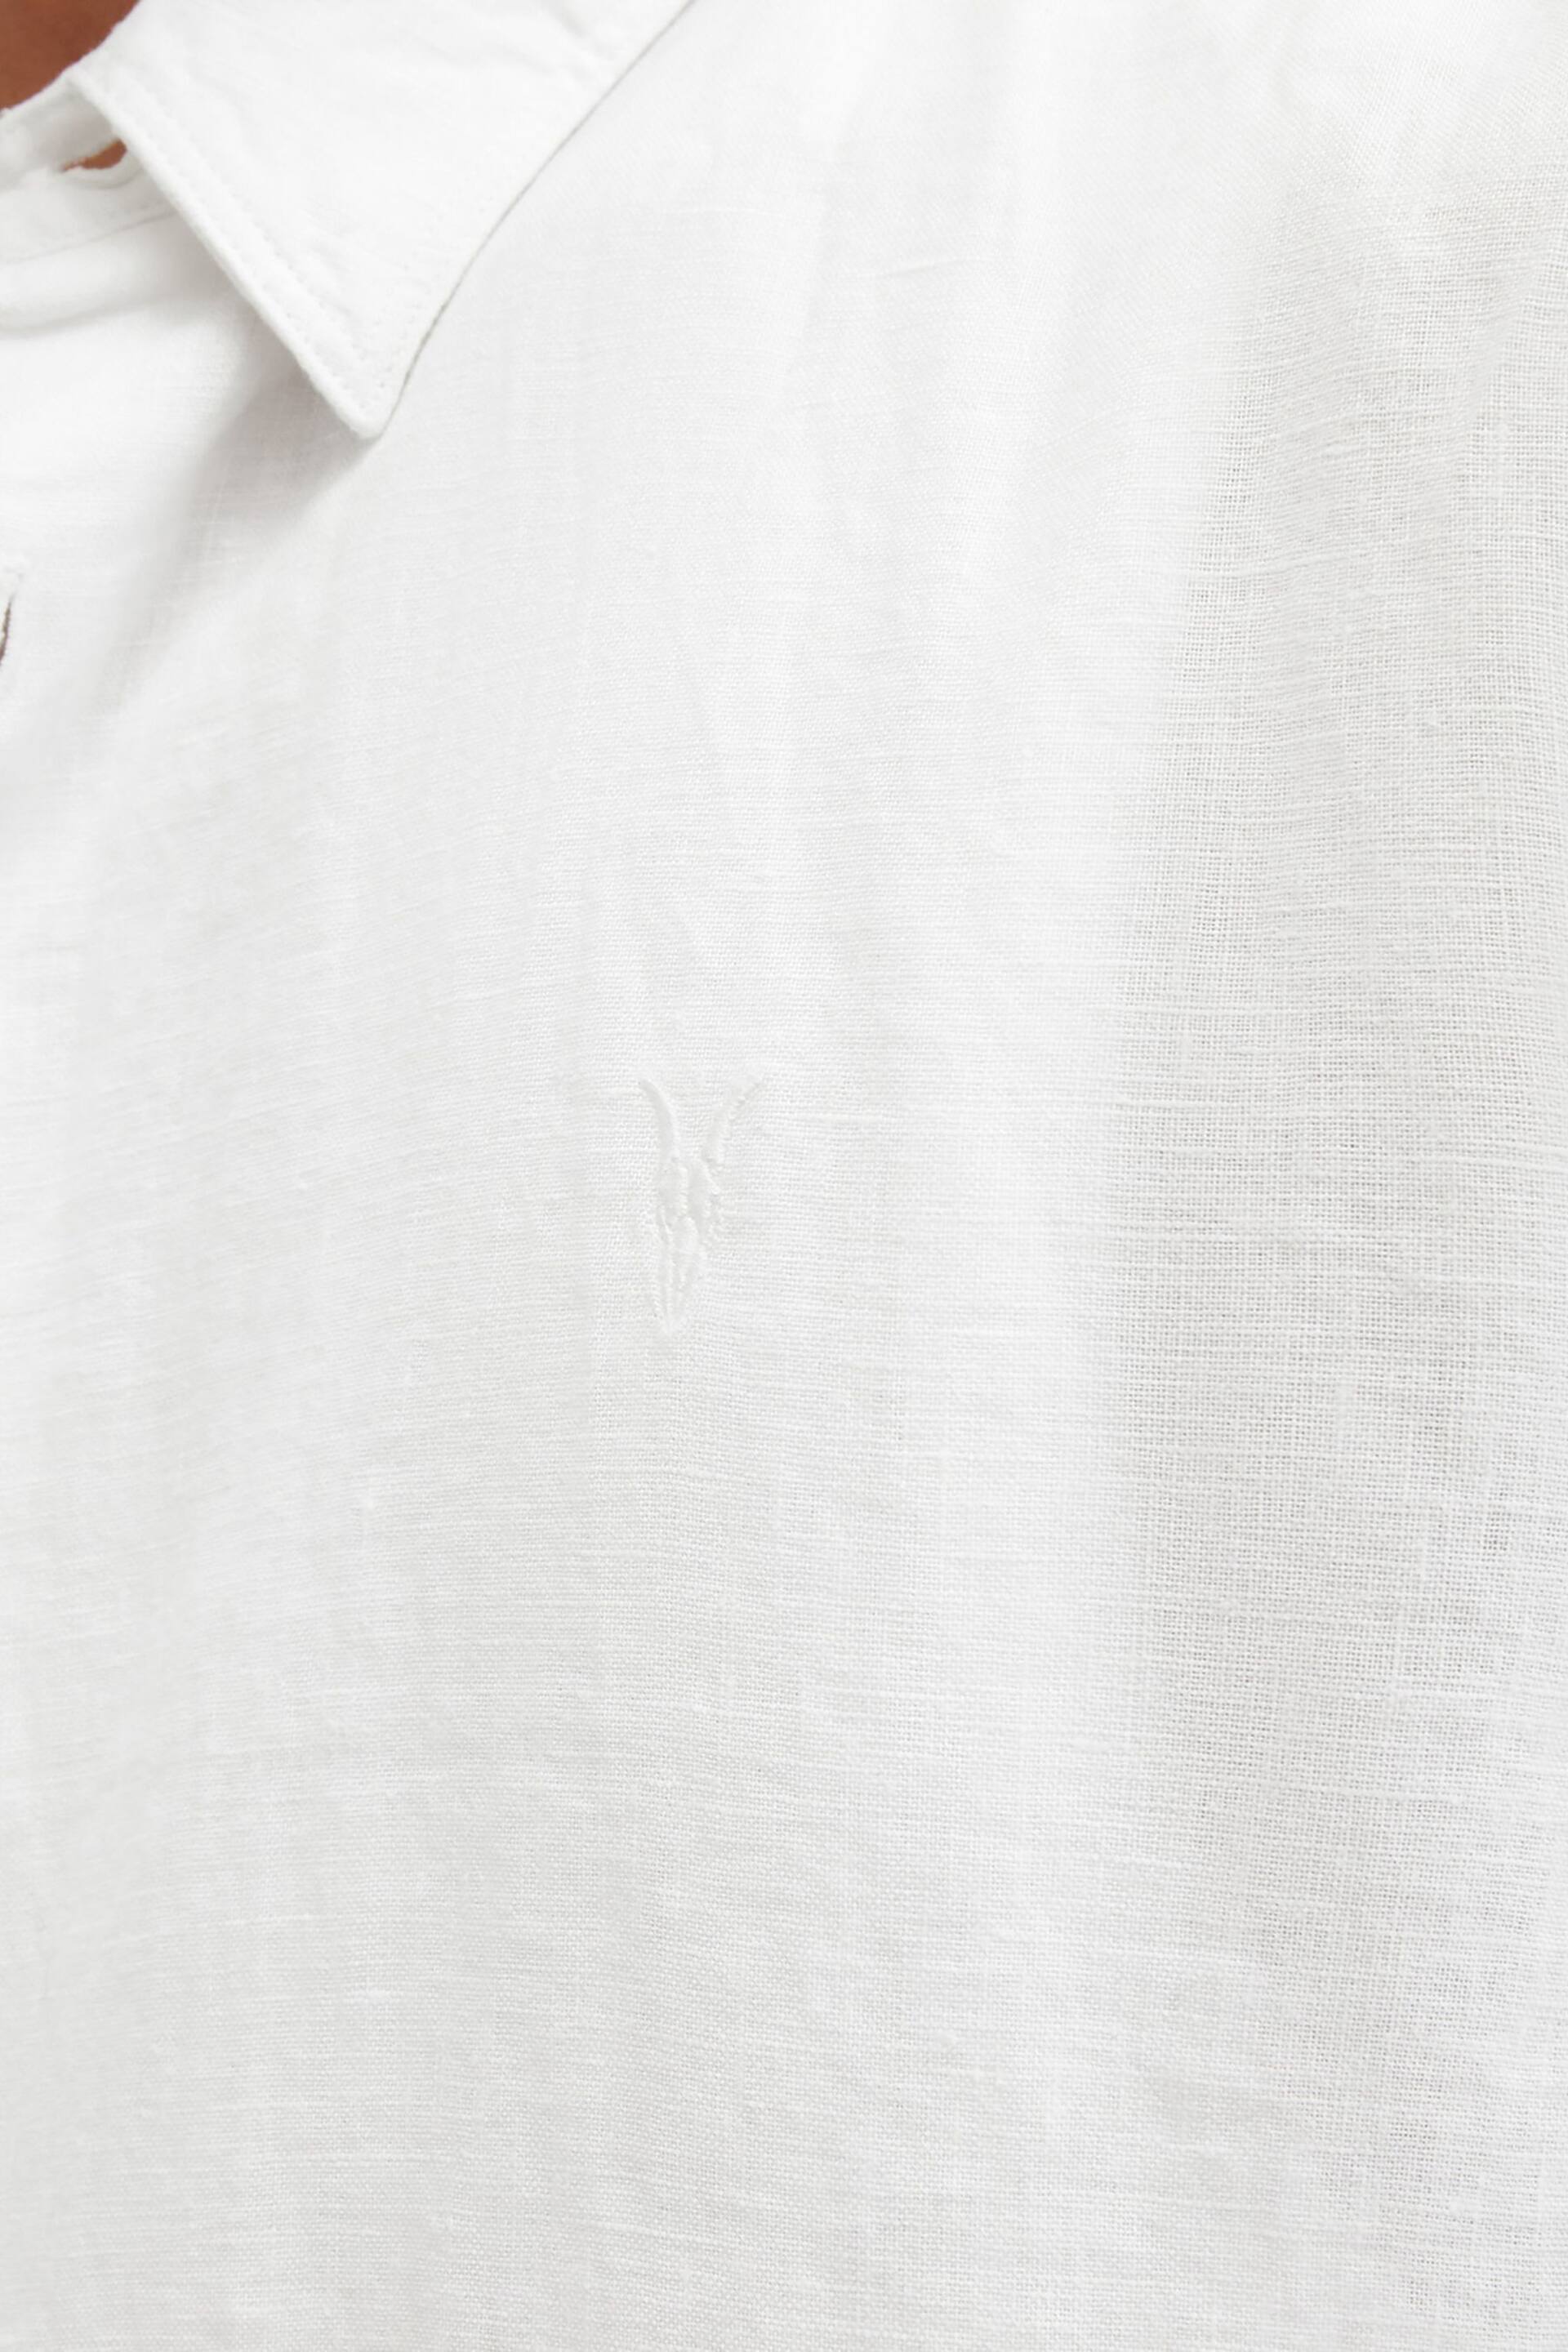 AllSaints White Cypress Long Sleeve Shirt - Image 7 of 8